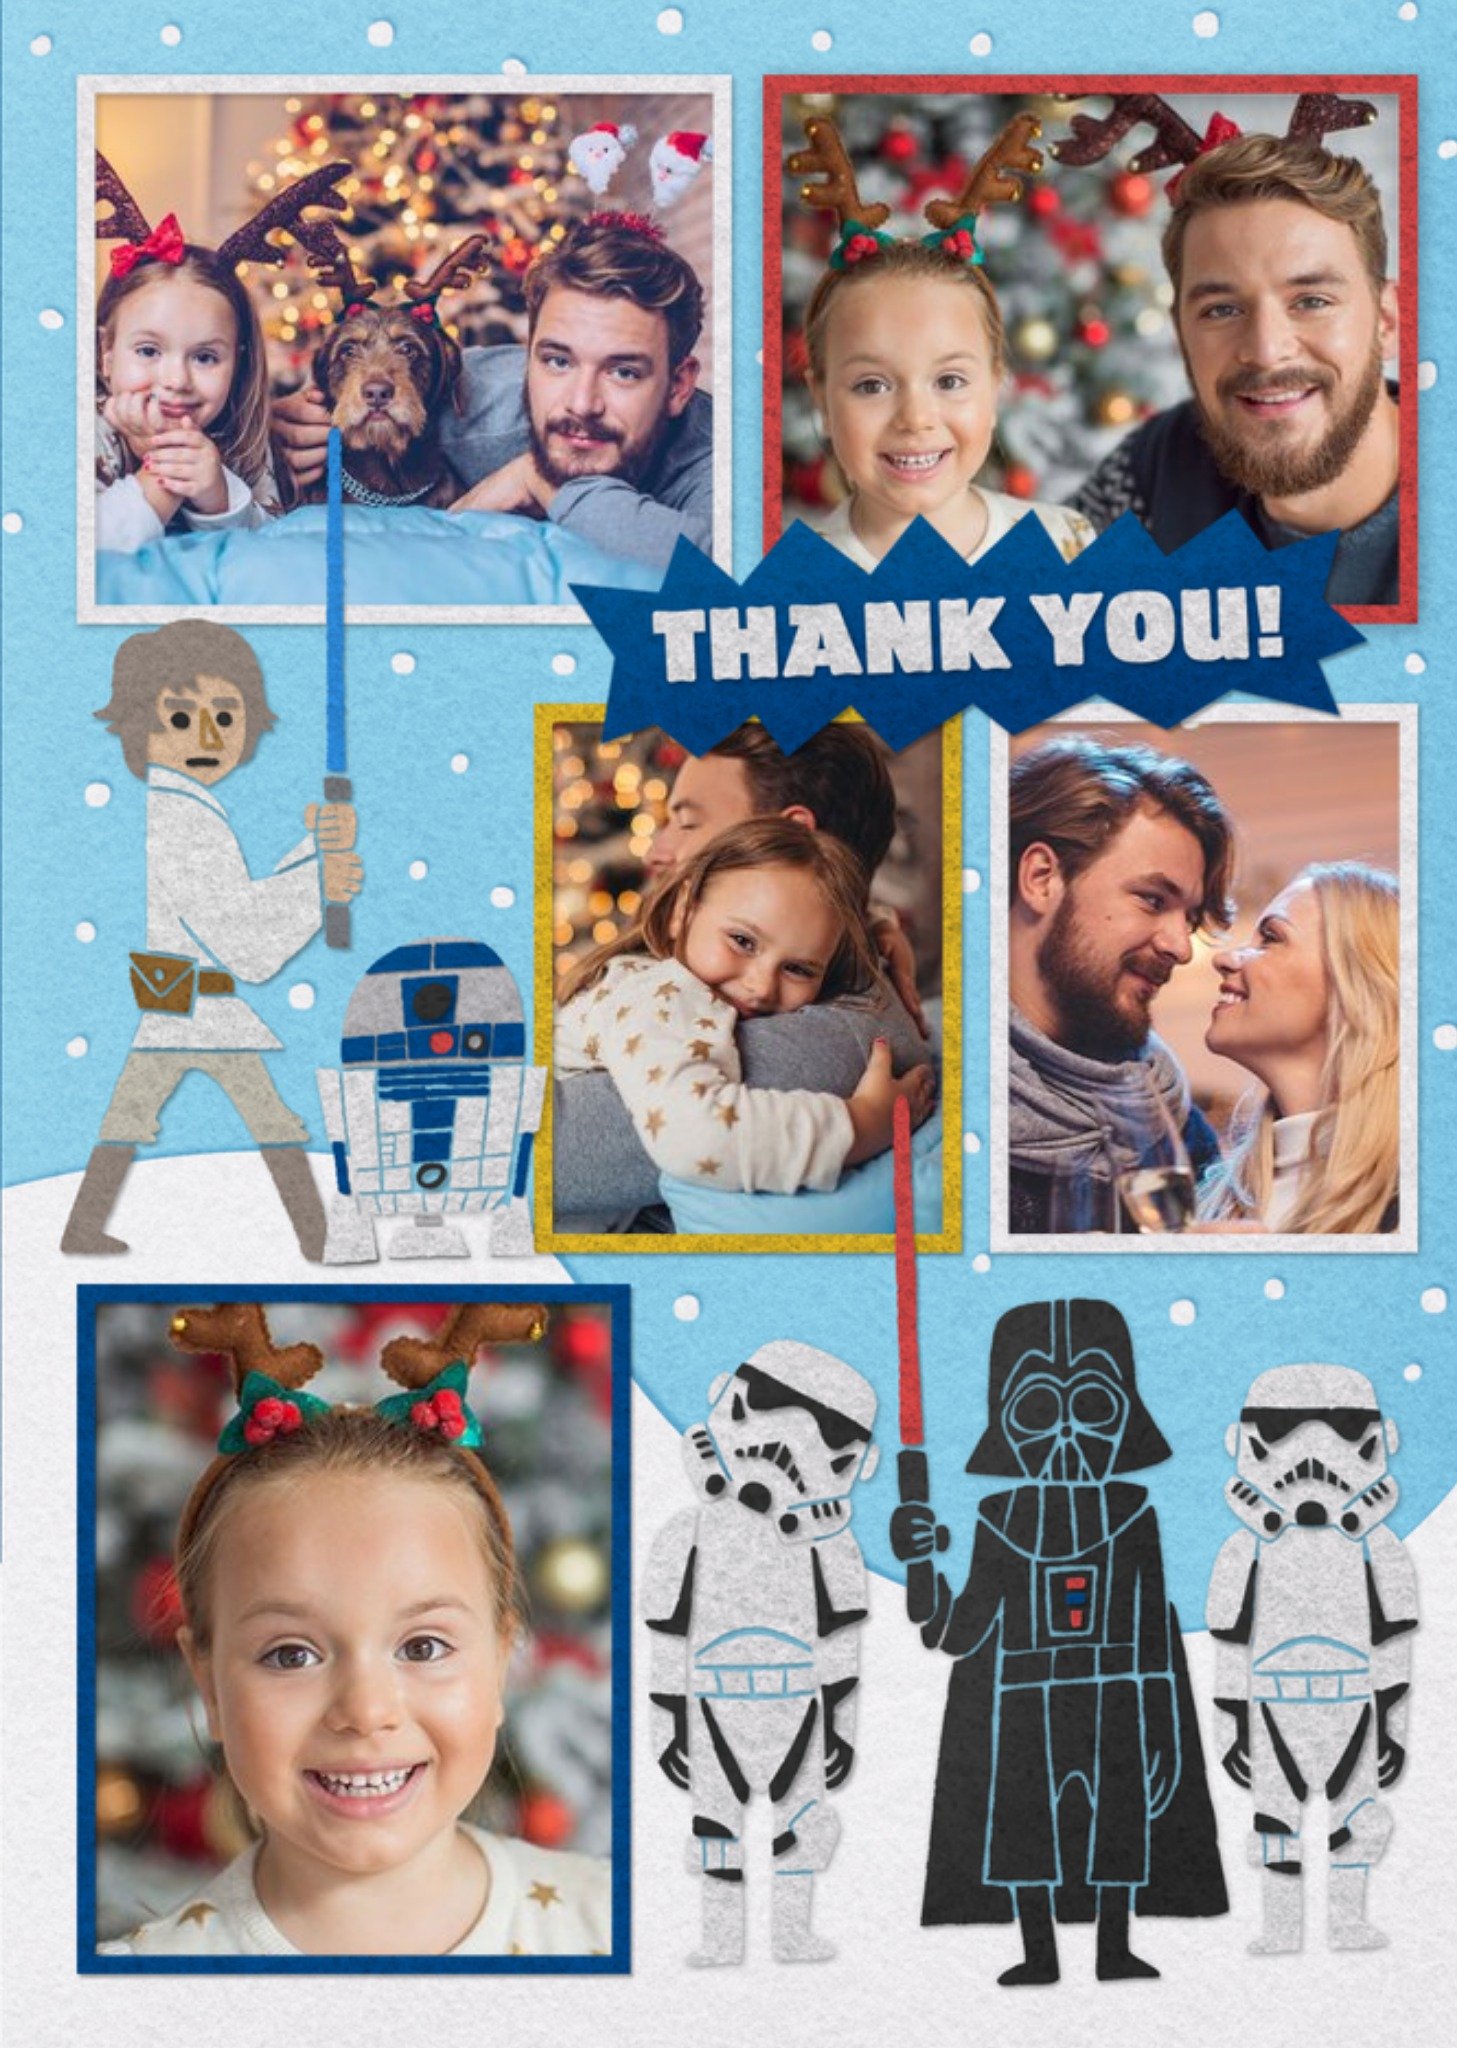 Disney Star Wars Felt Characters Christmas Thank You Card, Large